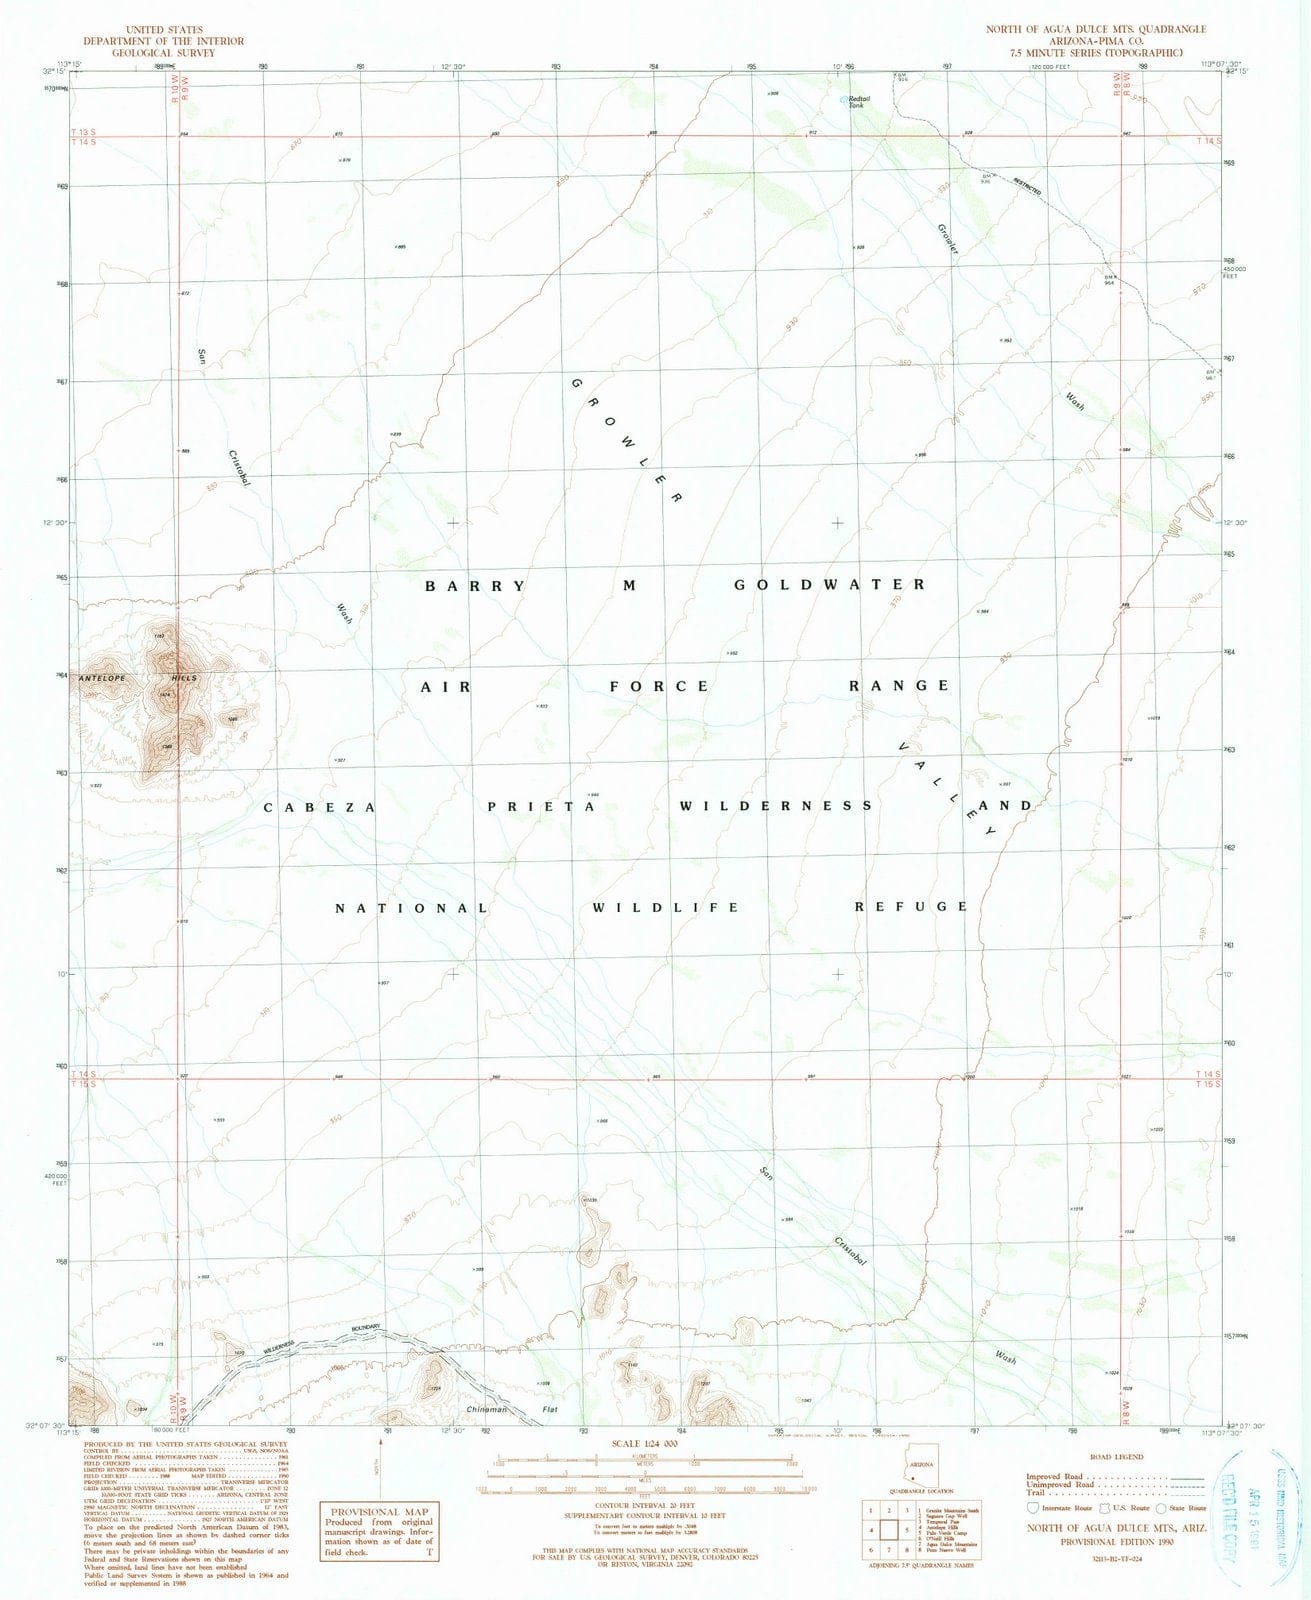 1990 North of Agua Dulce Mountains, AZ - Arizona - USGS Topographic Map